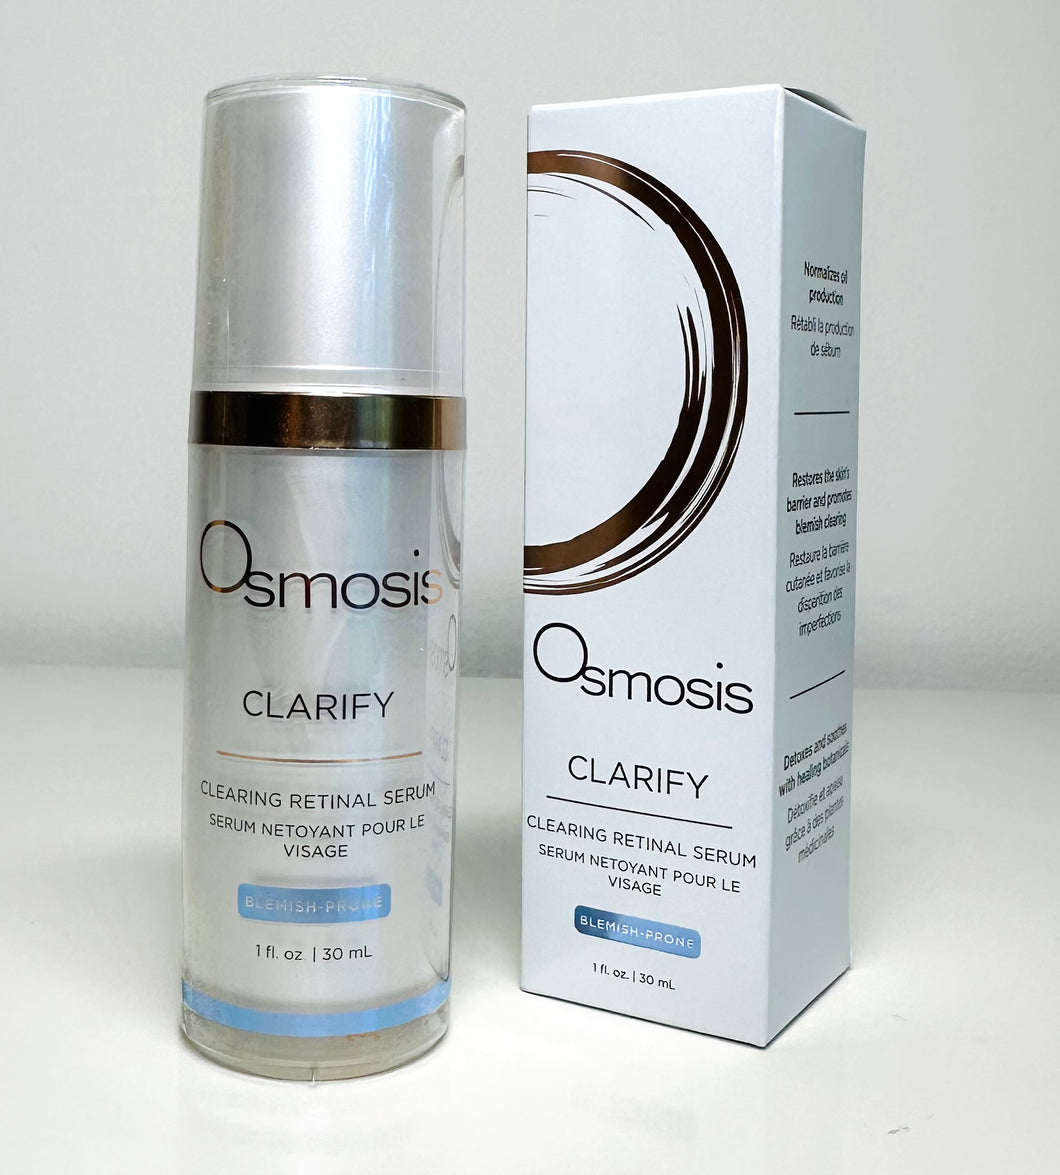 Osmosis Clarify Clarifying Retinal Serum